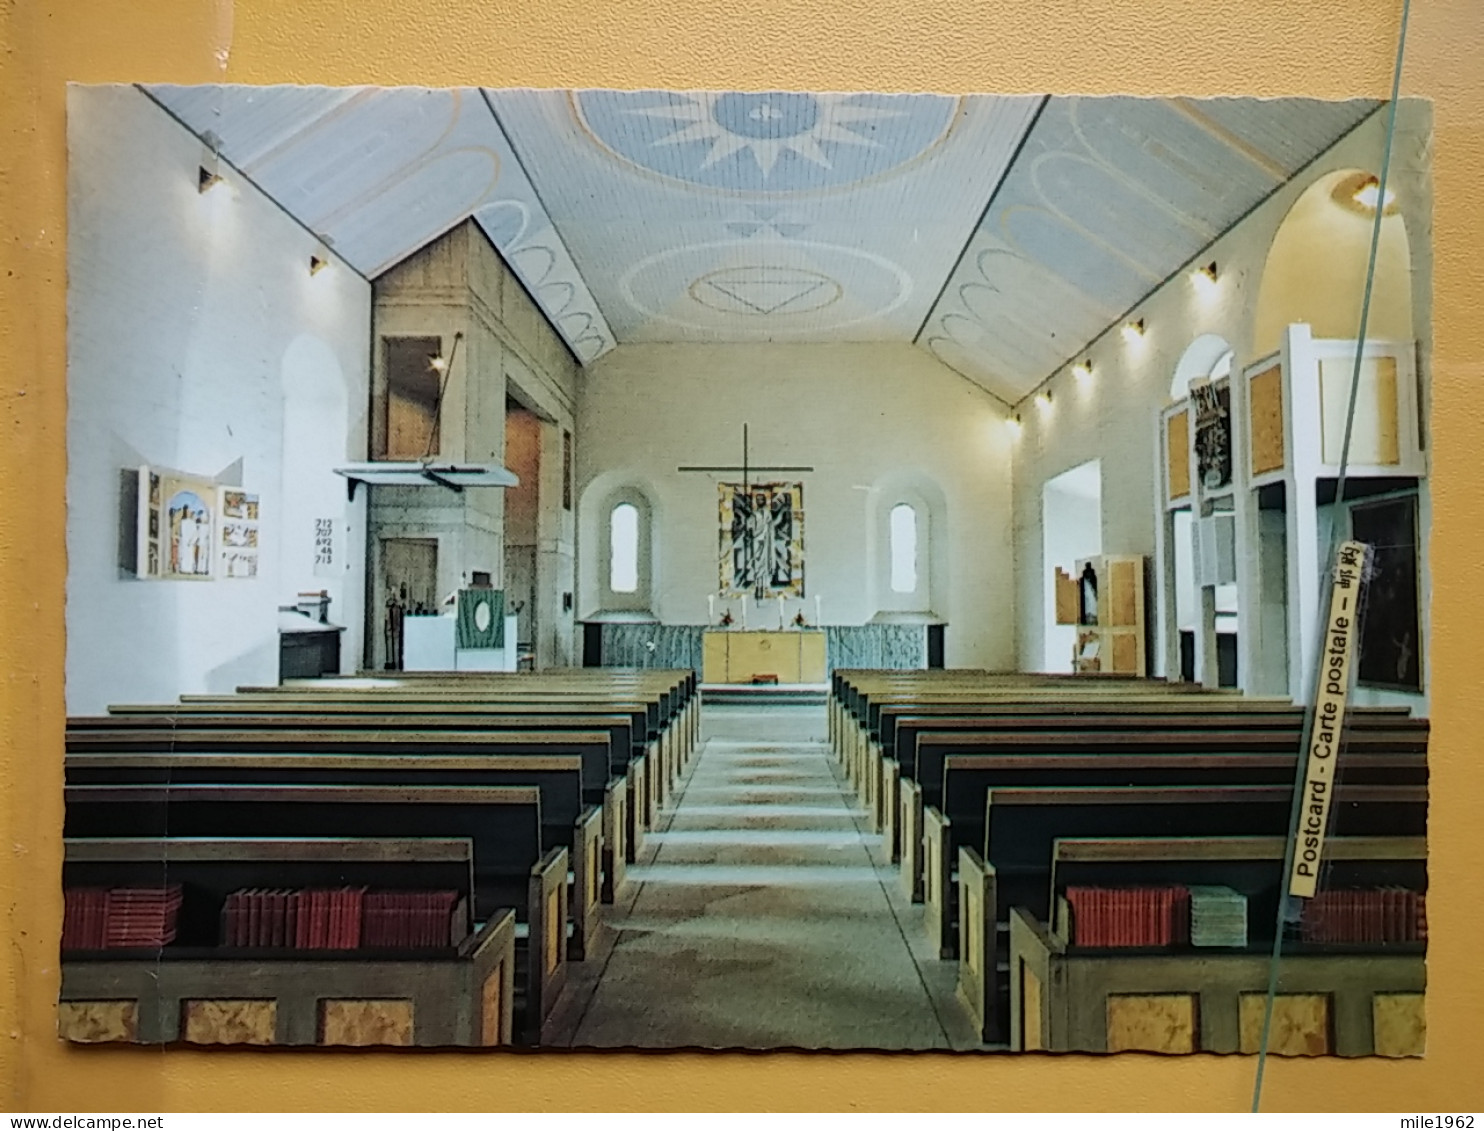 KOV 536-13 - SWEDEN , VIST KYRKA, CHURCH, EGLISE - Suède